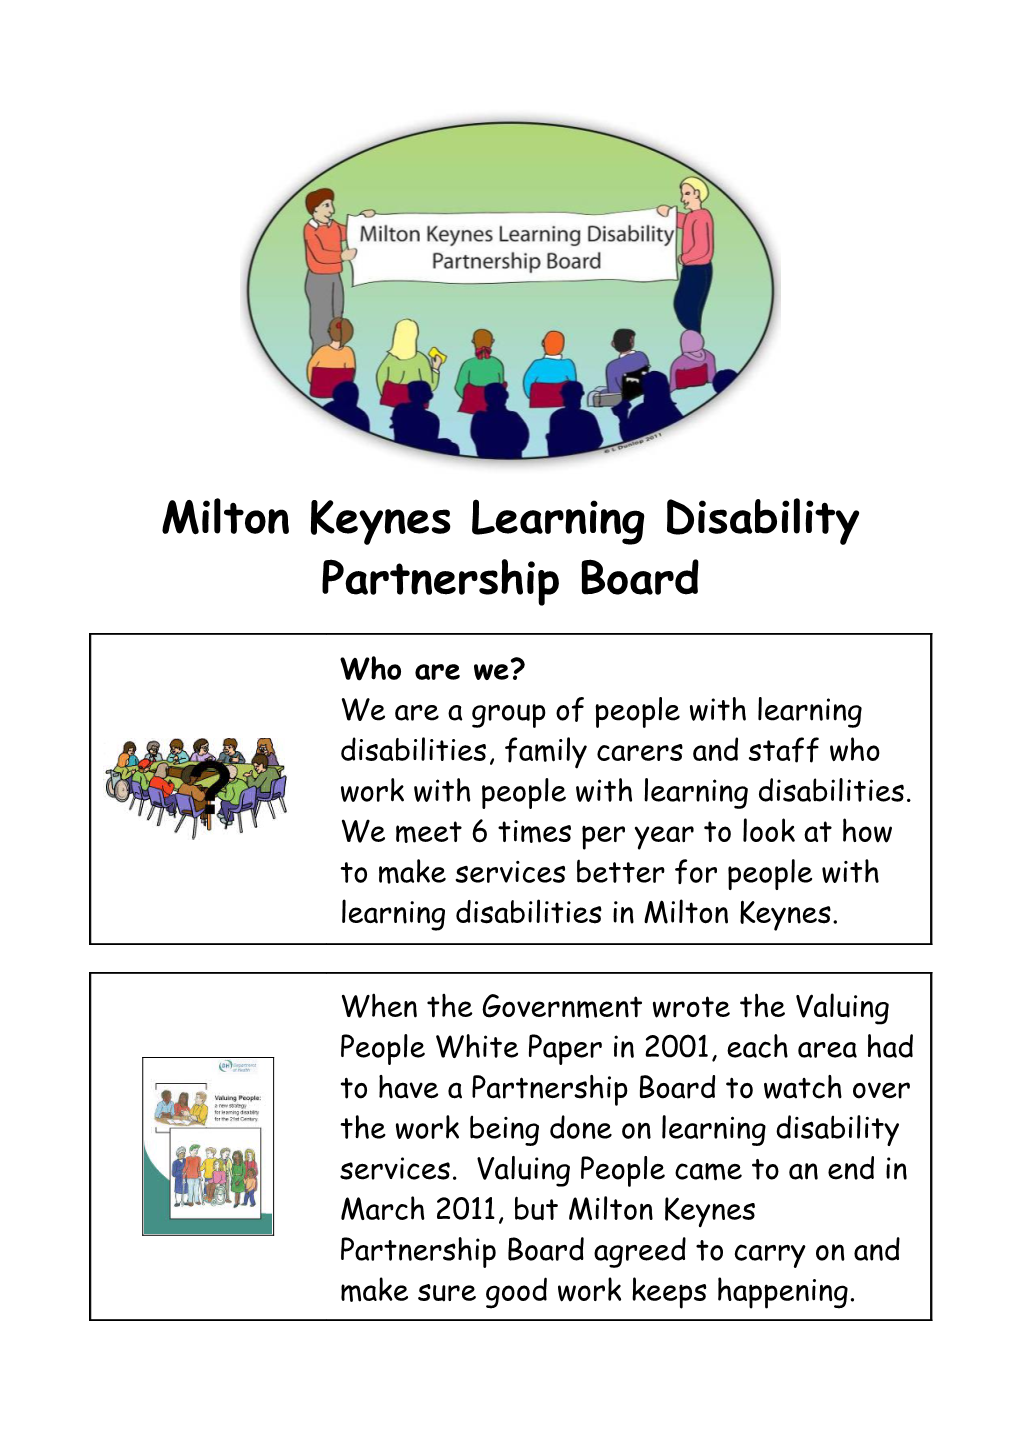 Milton Keynes Learning Disability Partnership Board